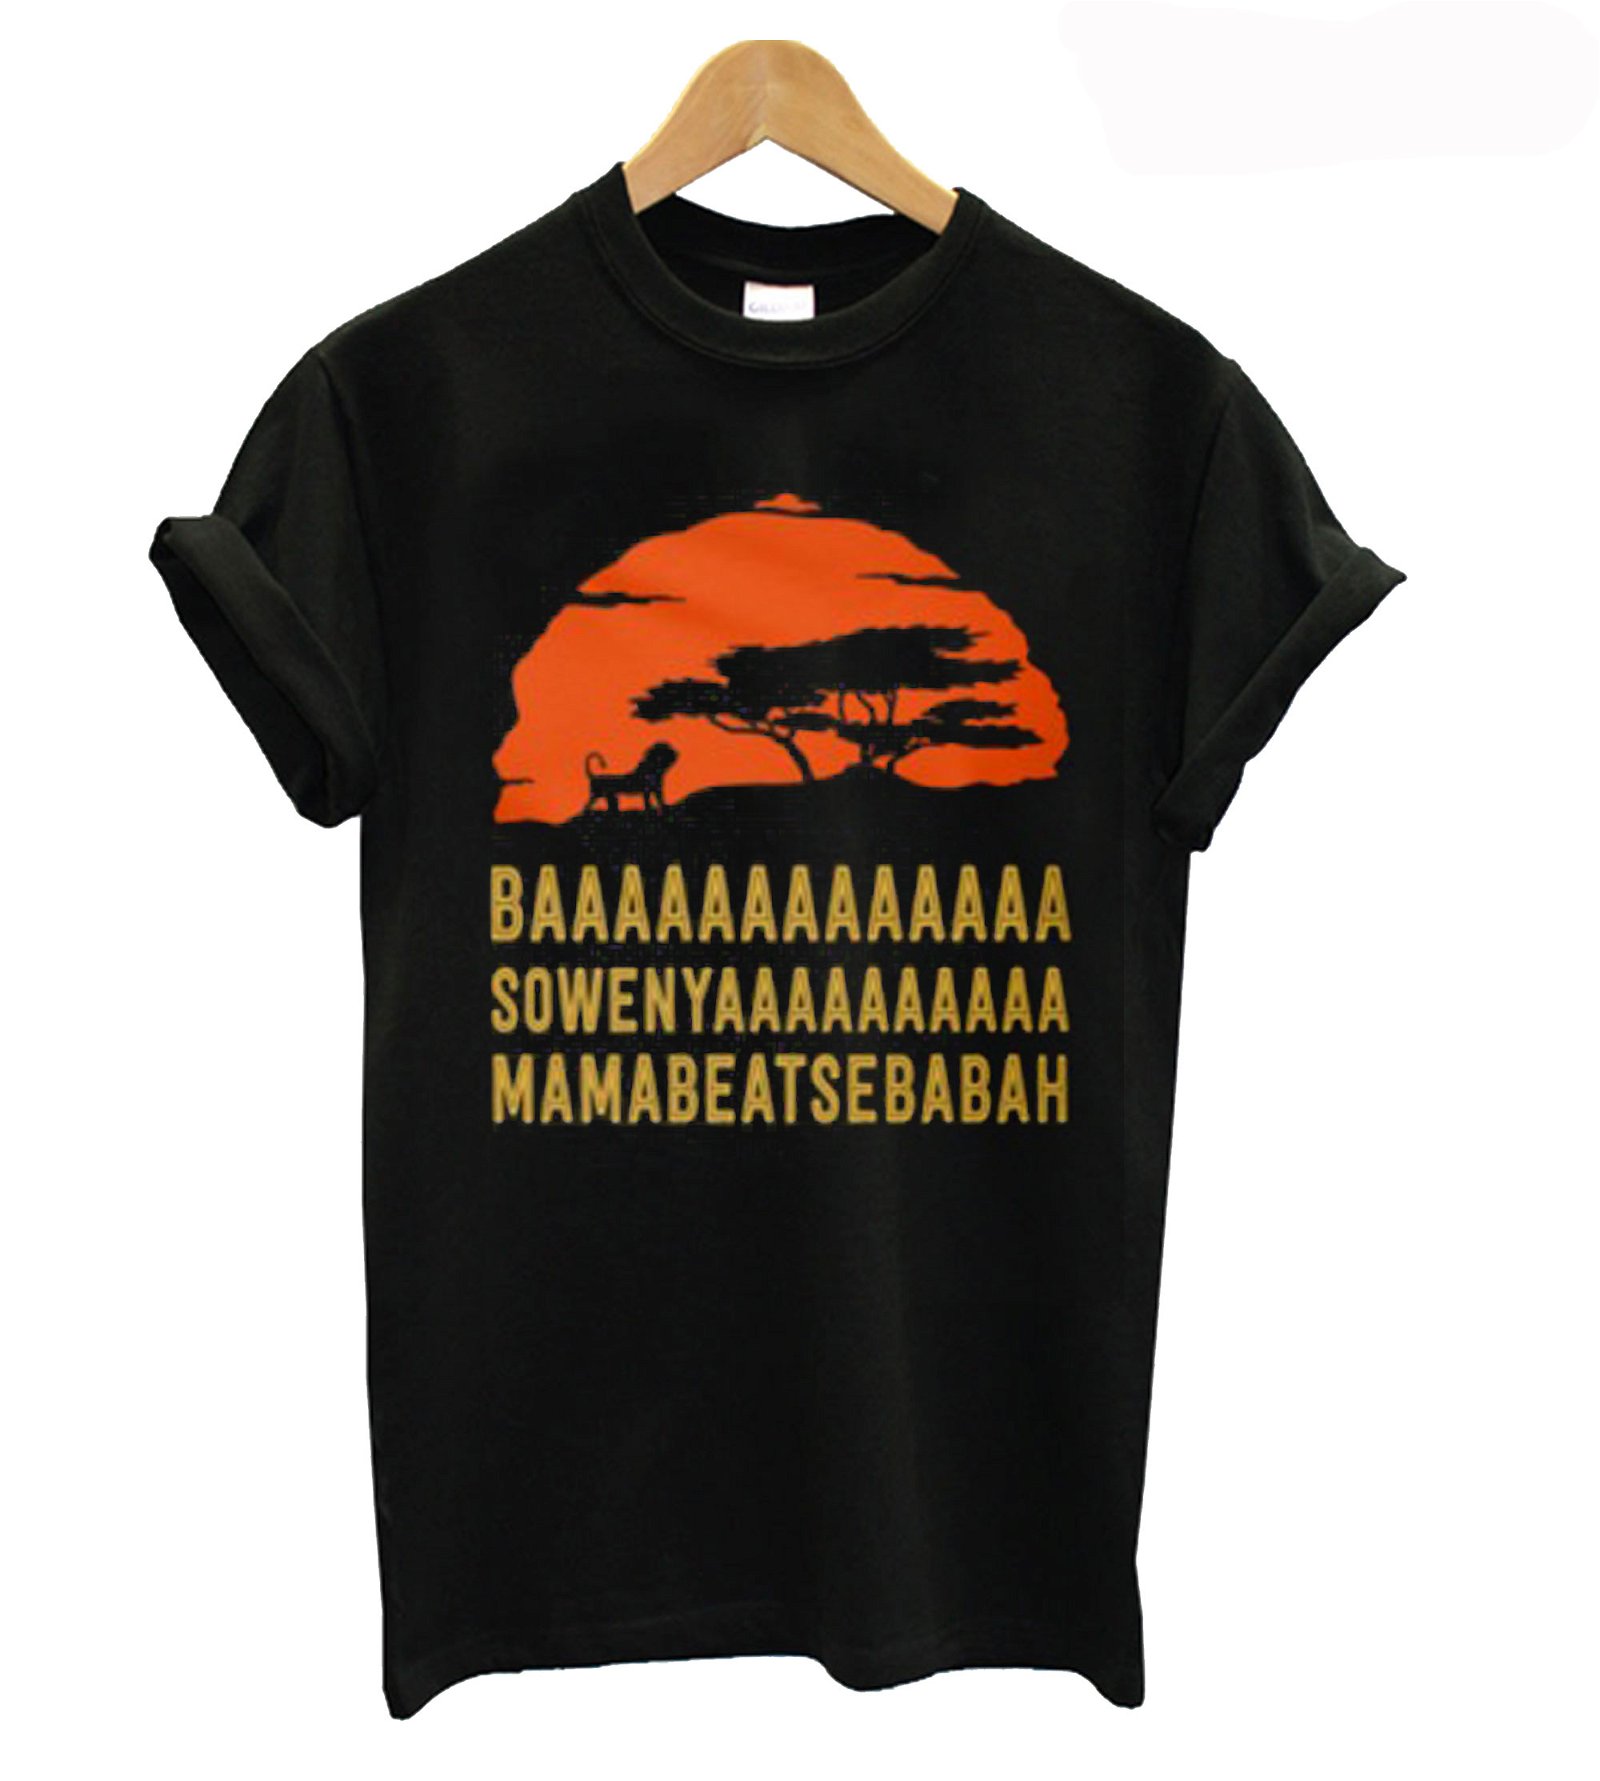 Baaa Sowenya Mamabeatsebabah African Lion T-Shirt KM